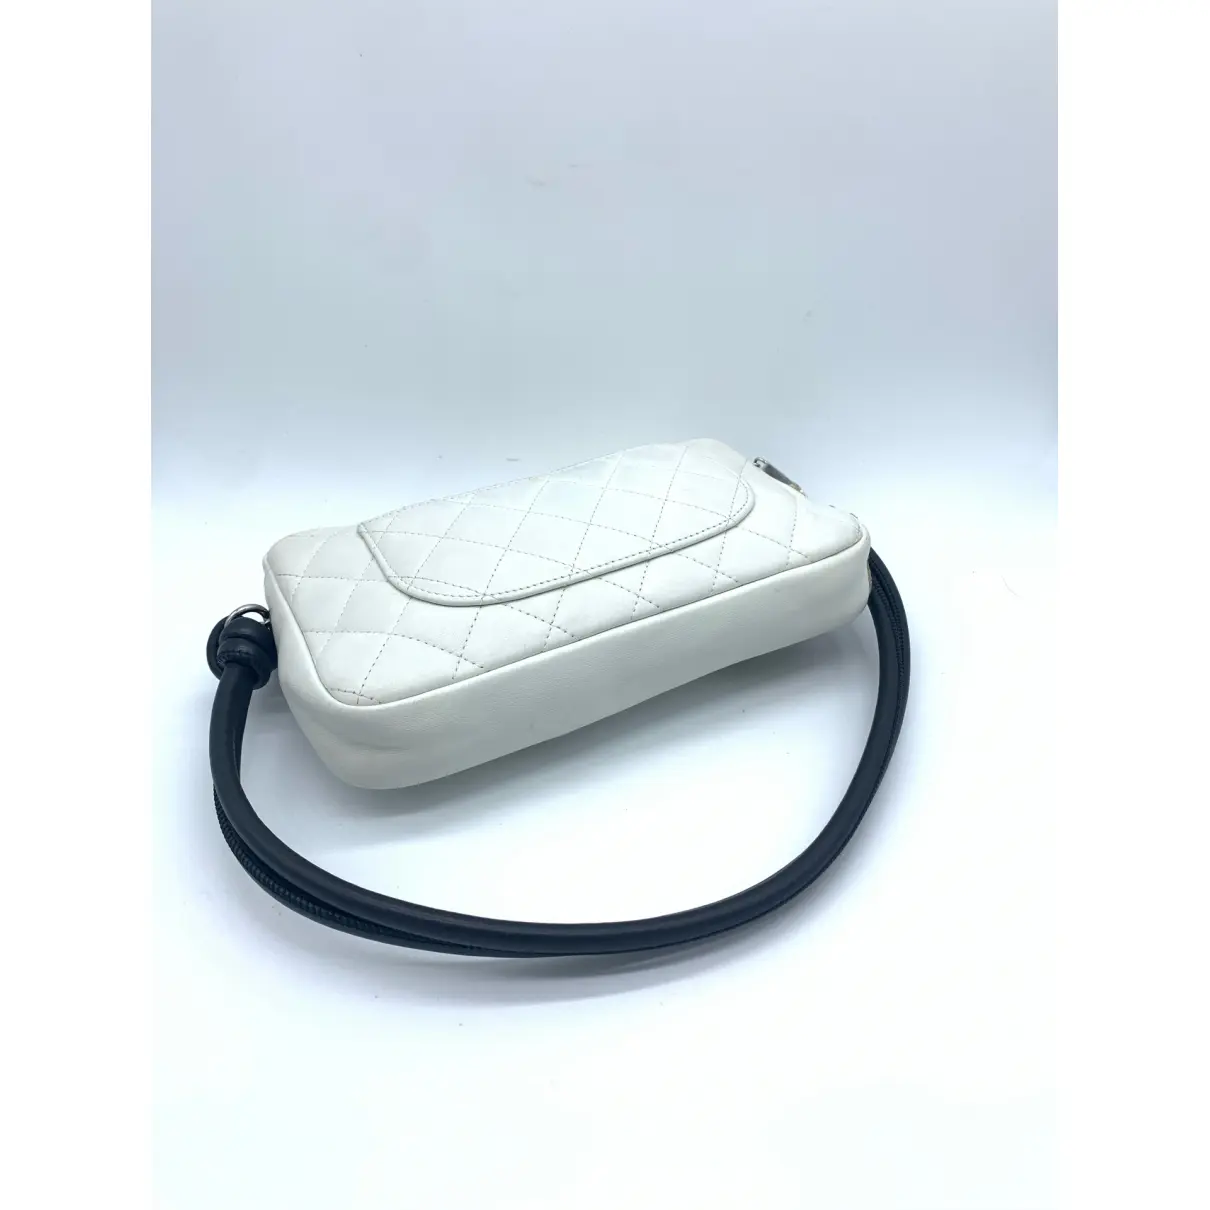 Cambon Small Rectangle leather handbag Chanel - Vintage